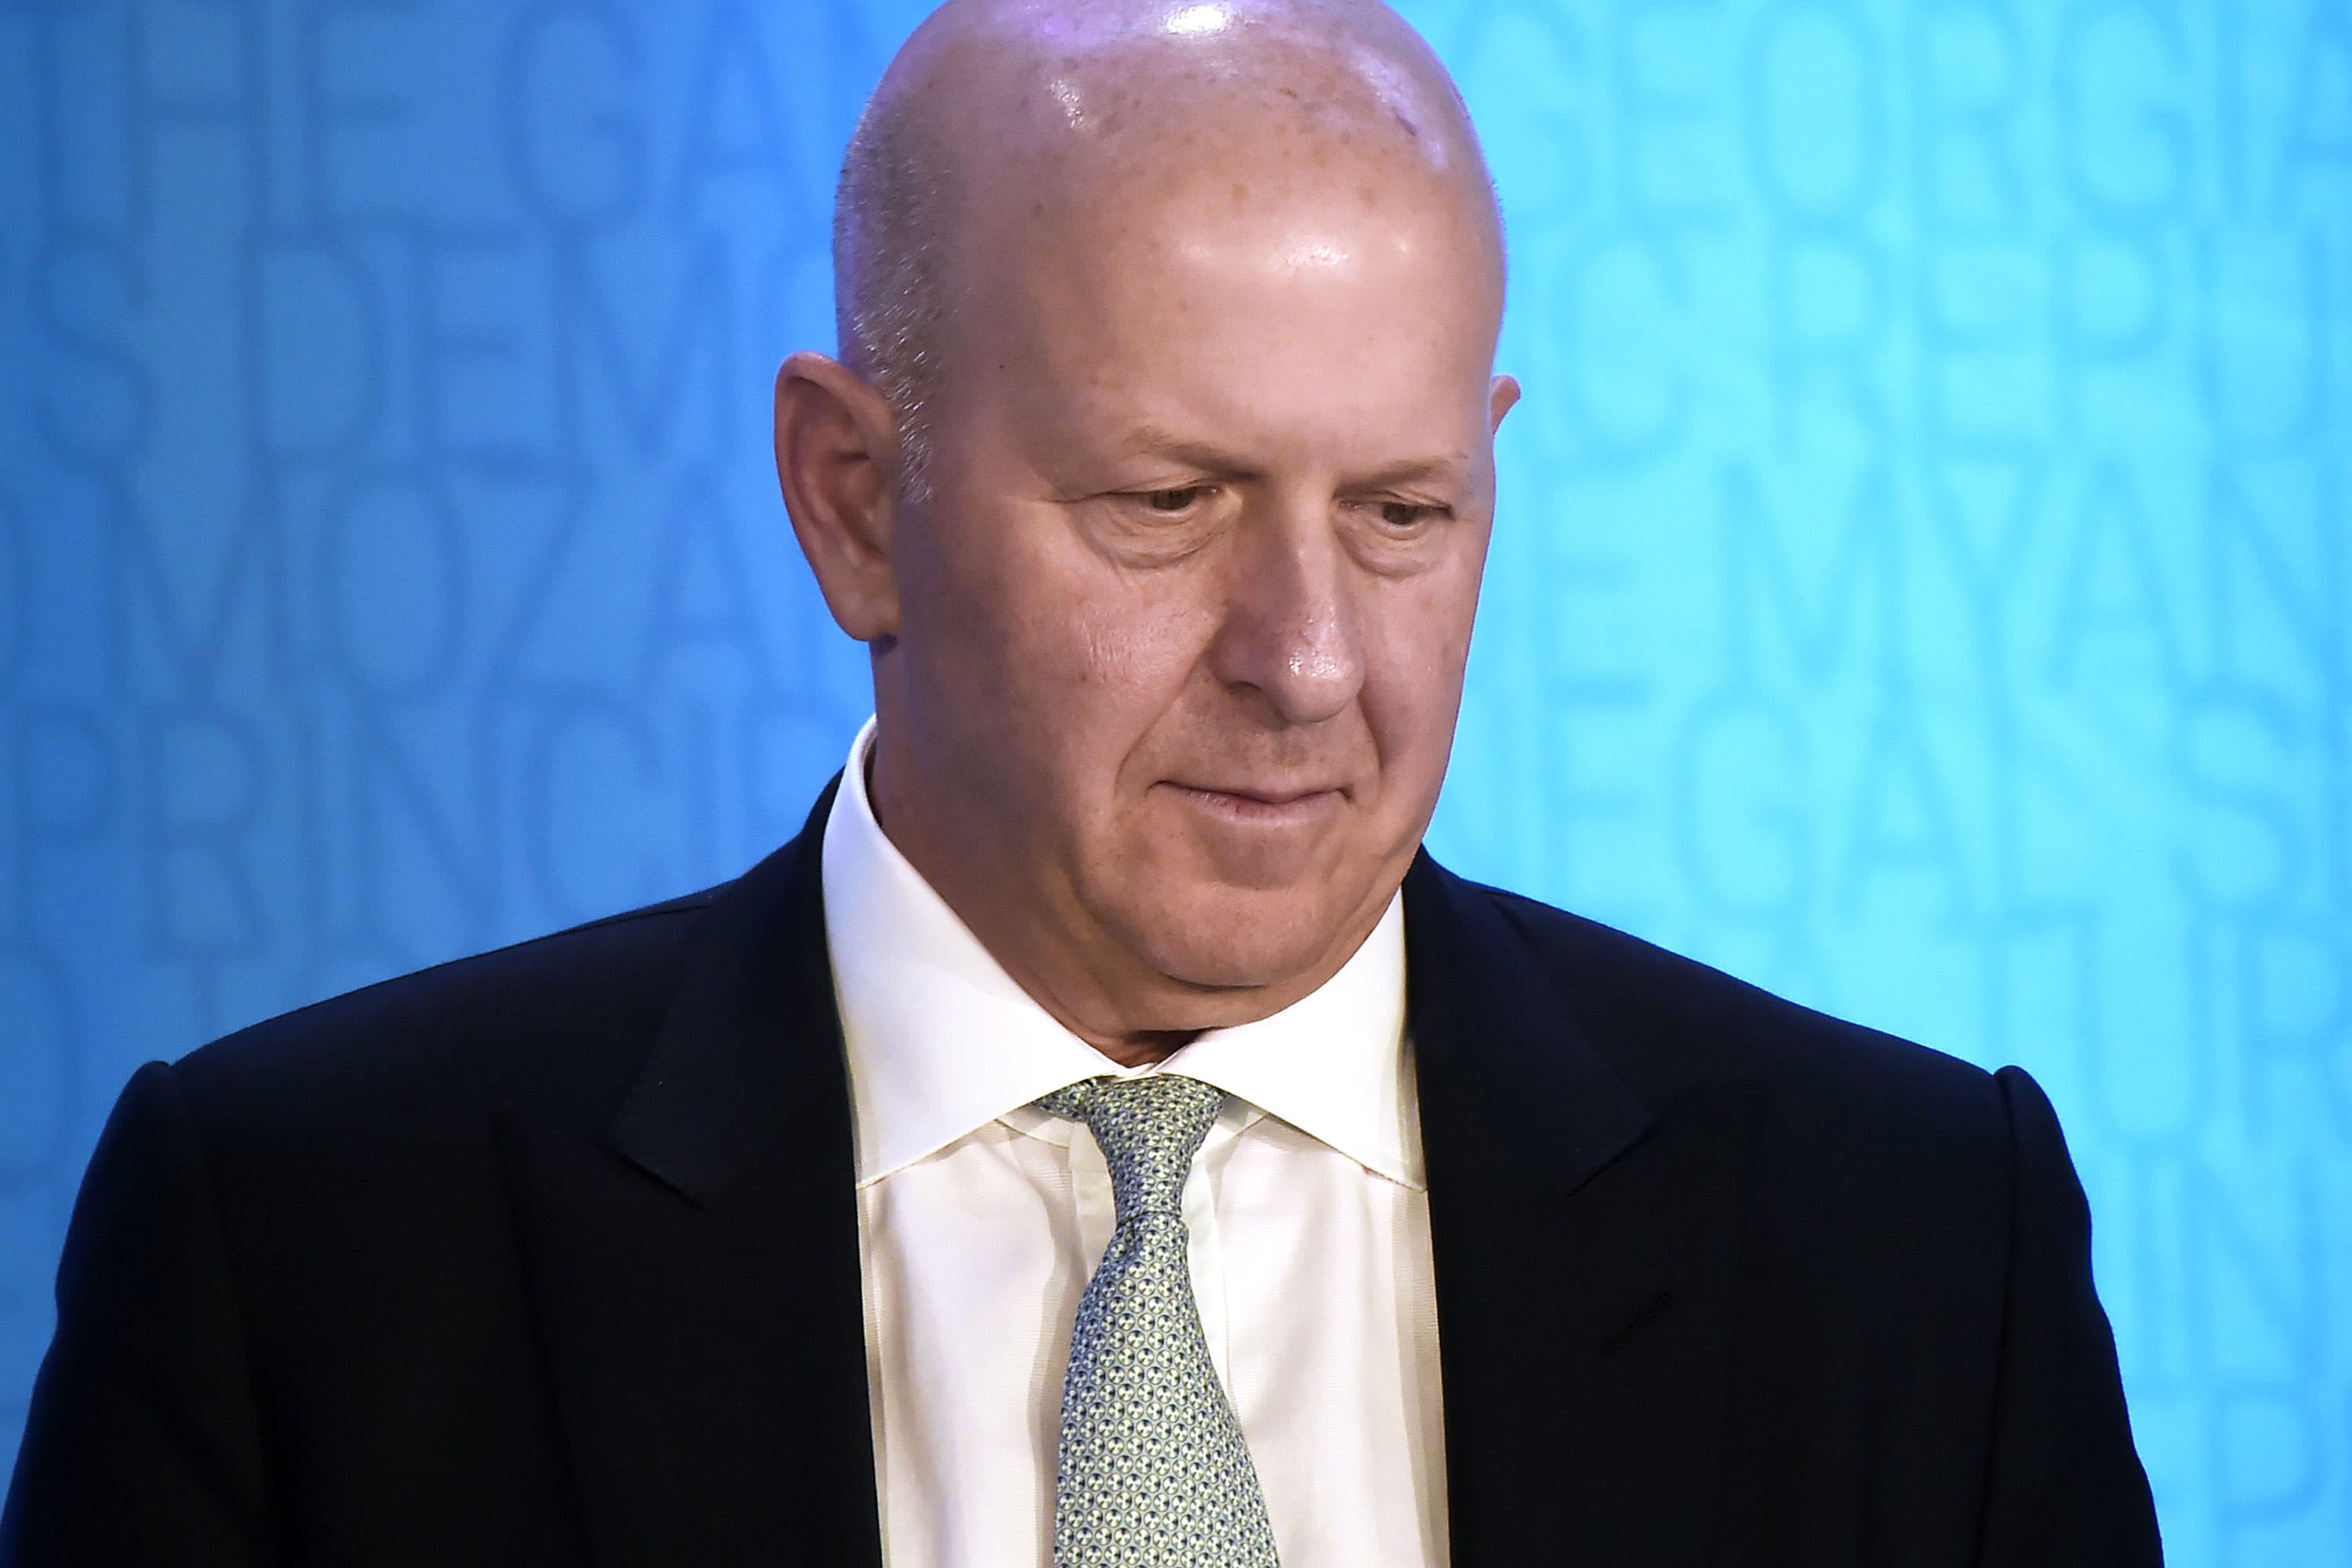 David Solomon, CEO of Goldman Sachs, receives a $ 10 million pay cut of over $ 1 million